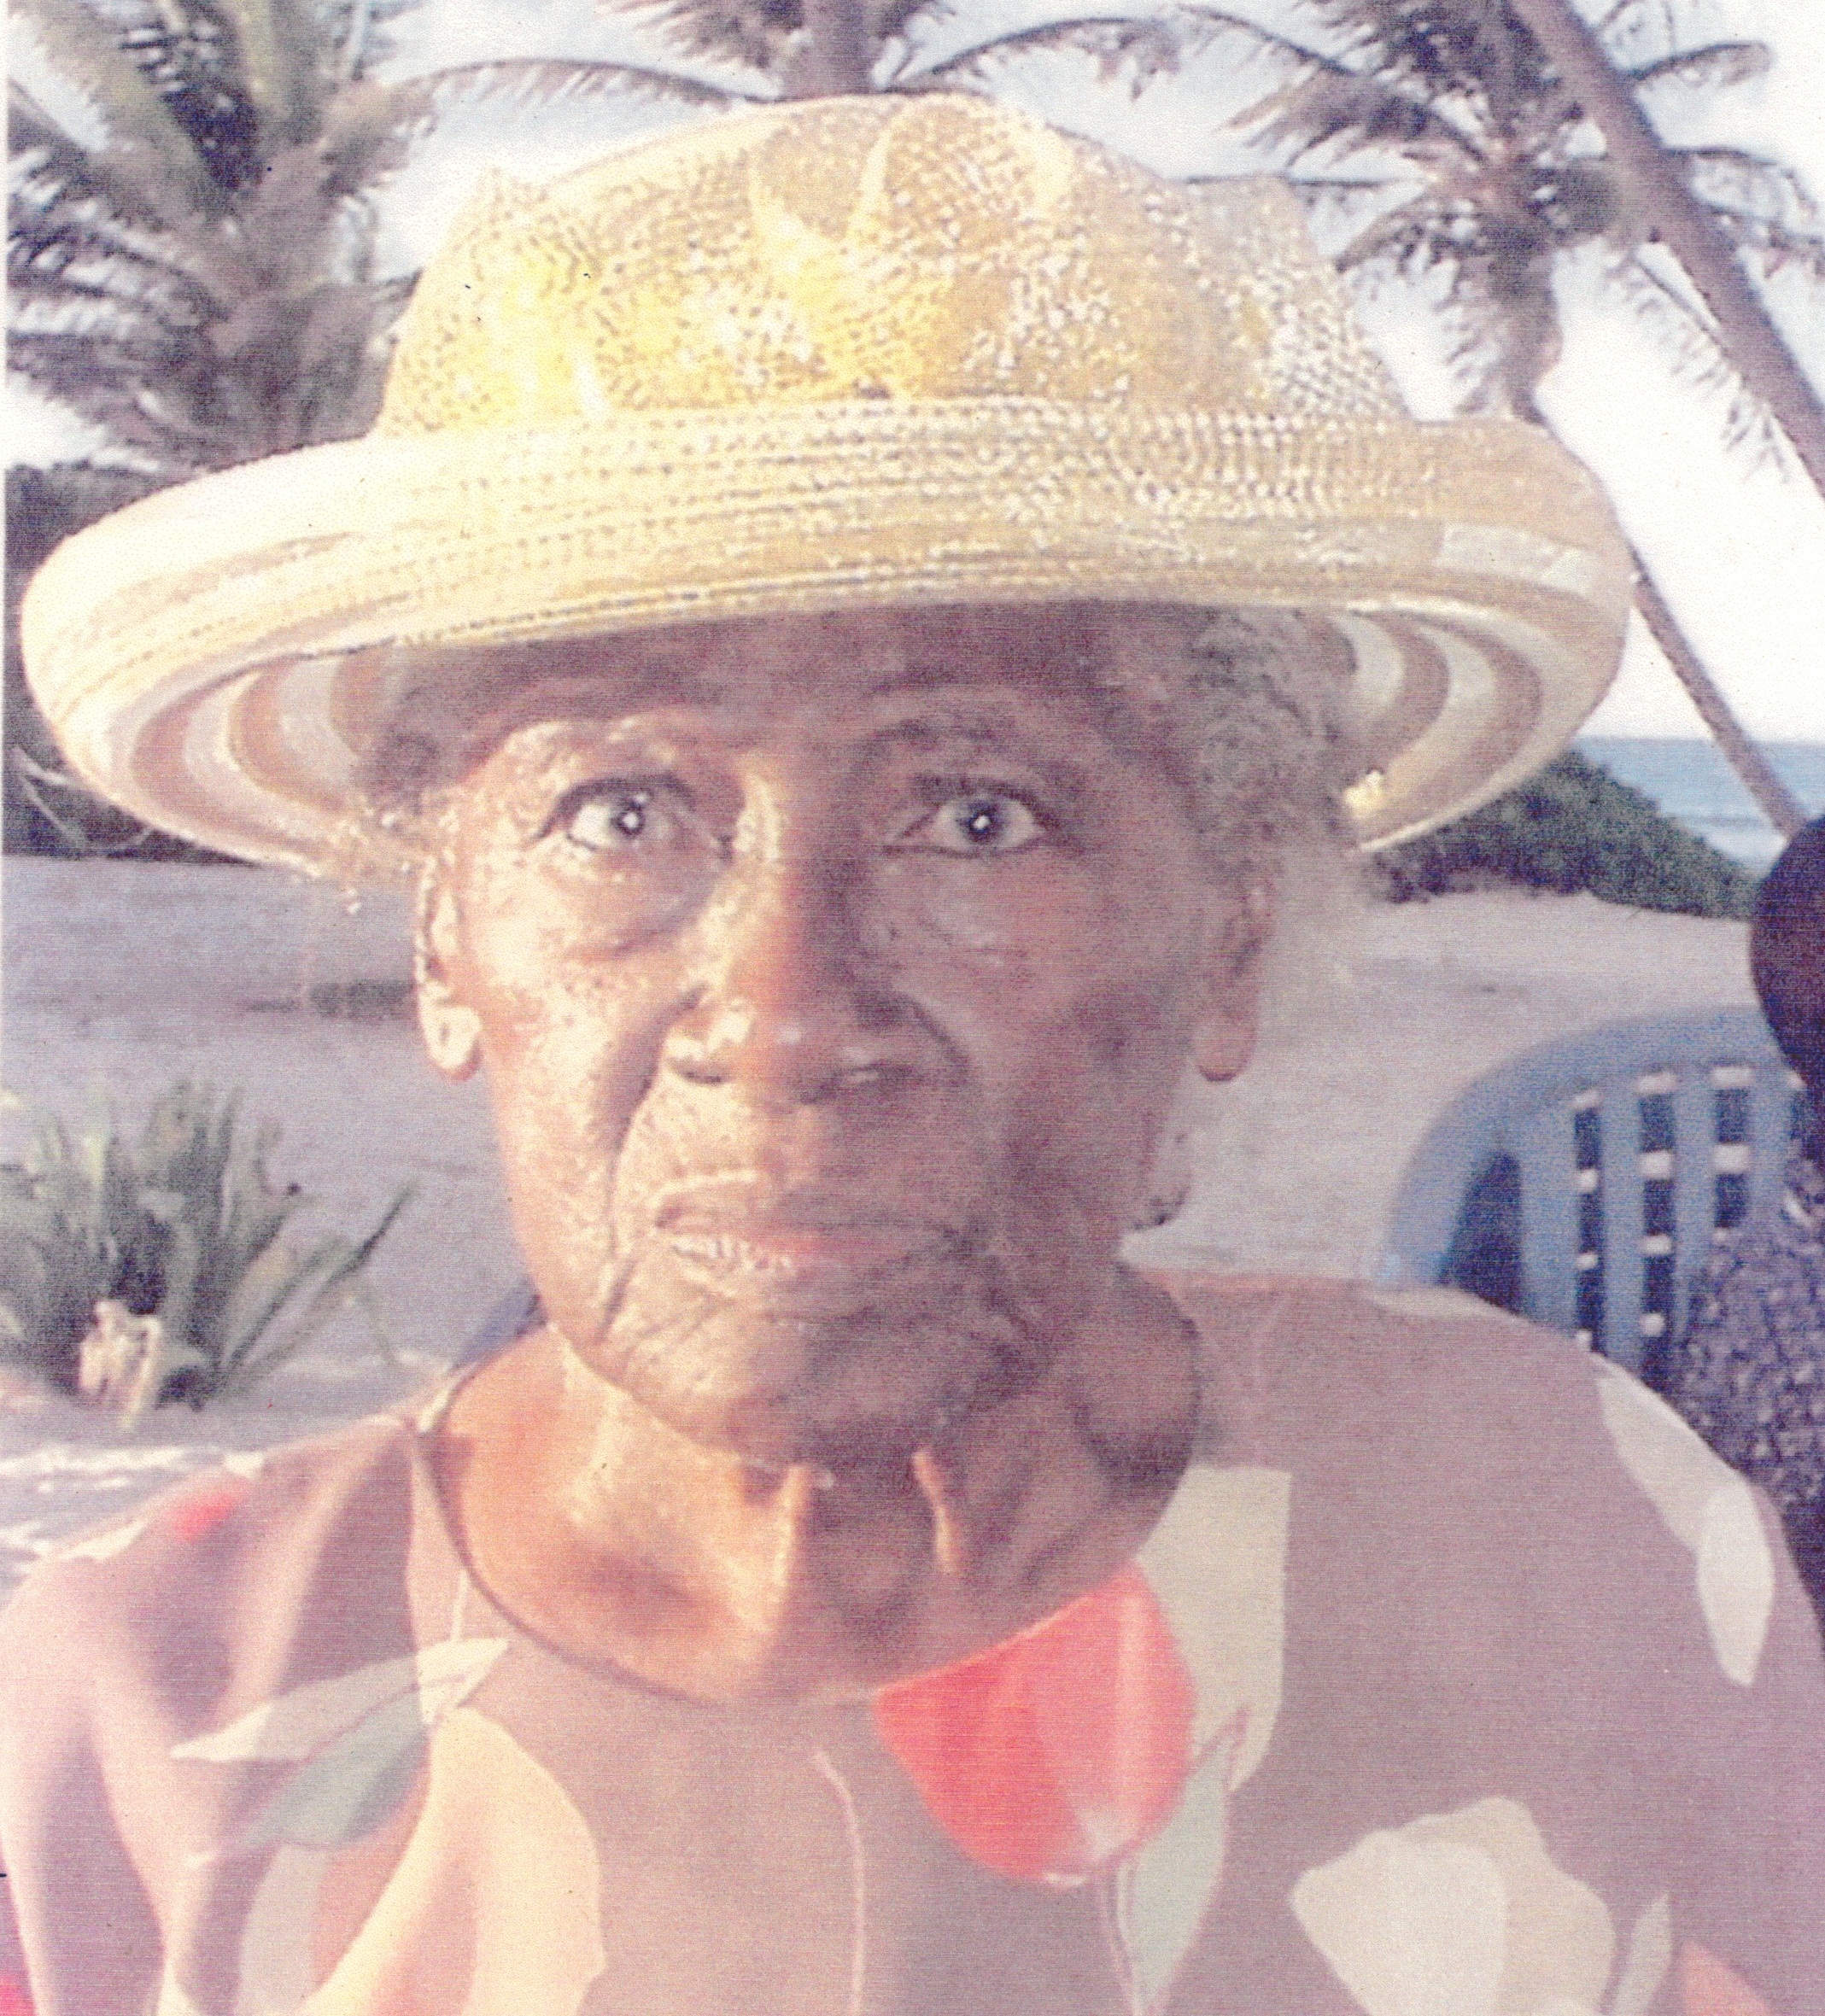 Asselita E. Wyatt Dies at 99